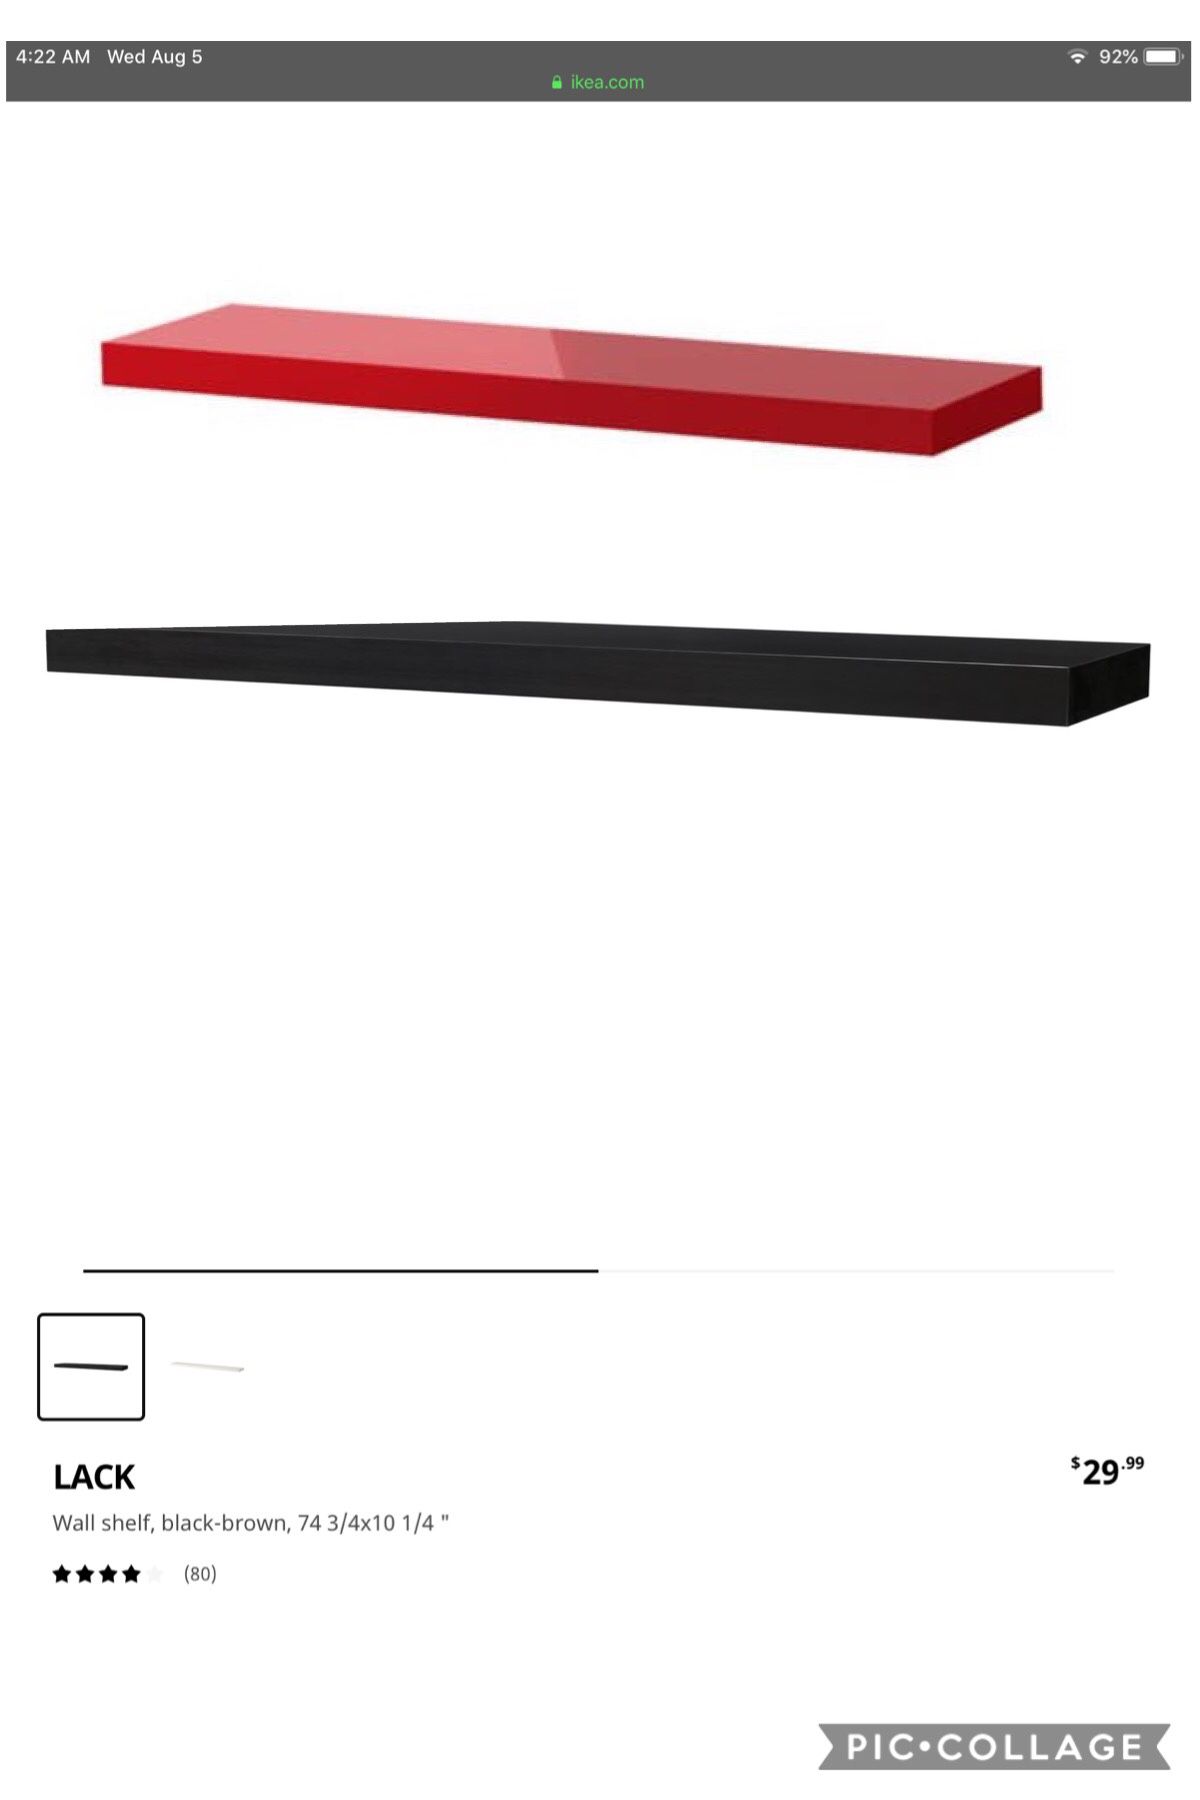 Two IKEA floating wall ledges / shelves (one long / one medium)